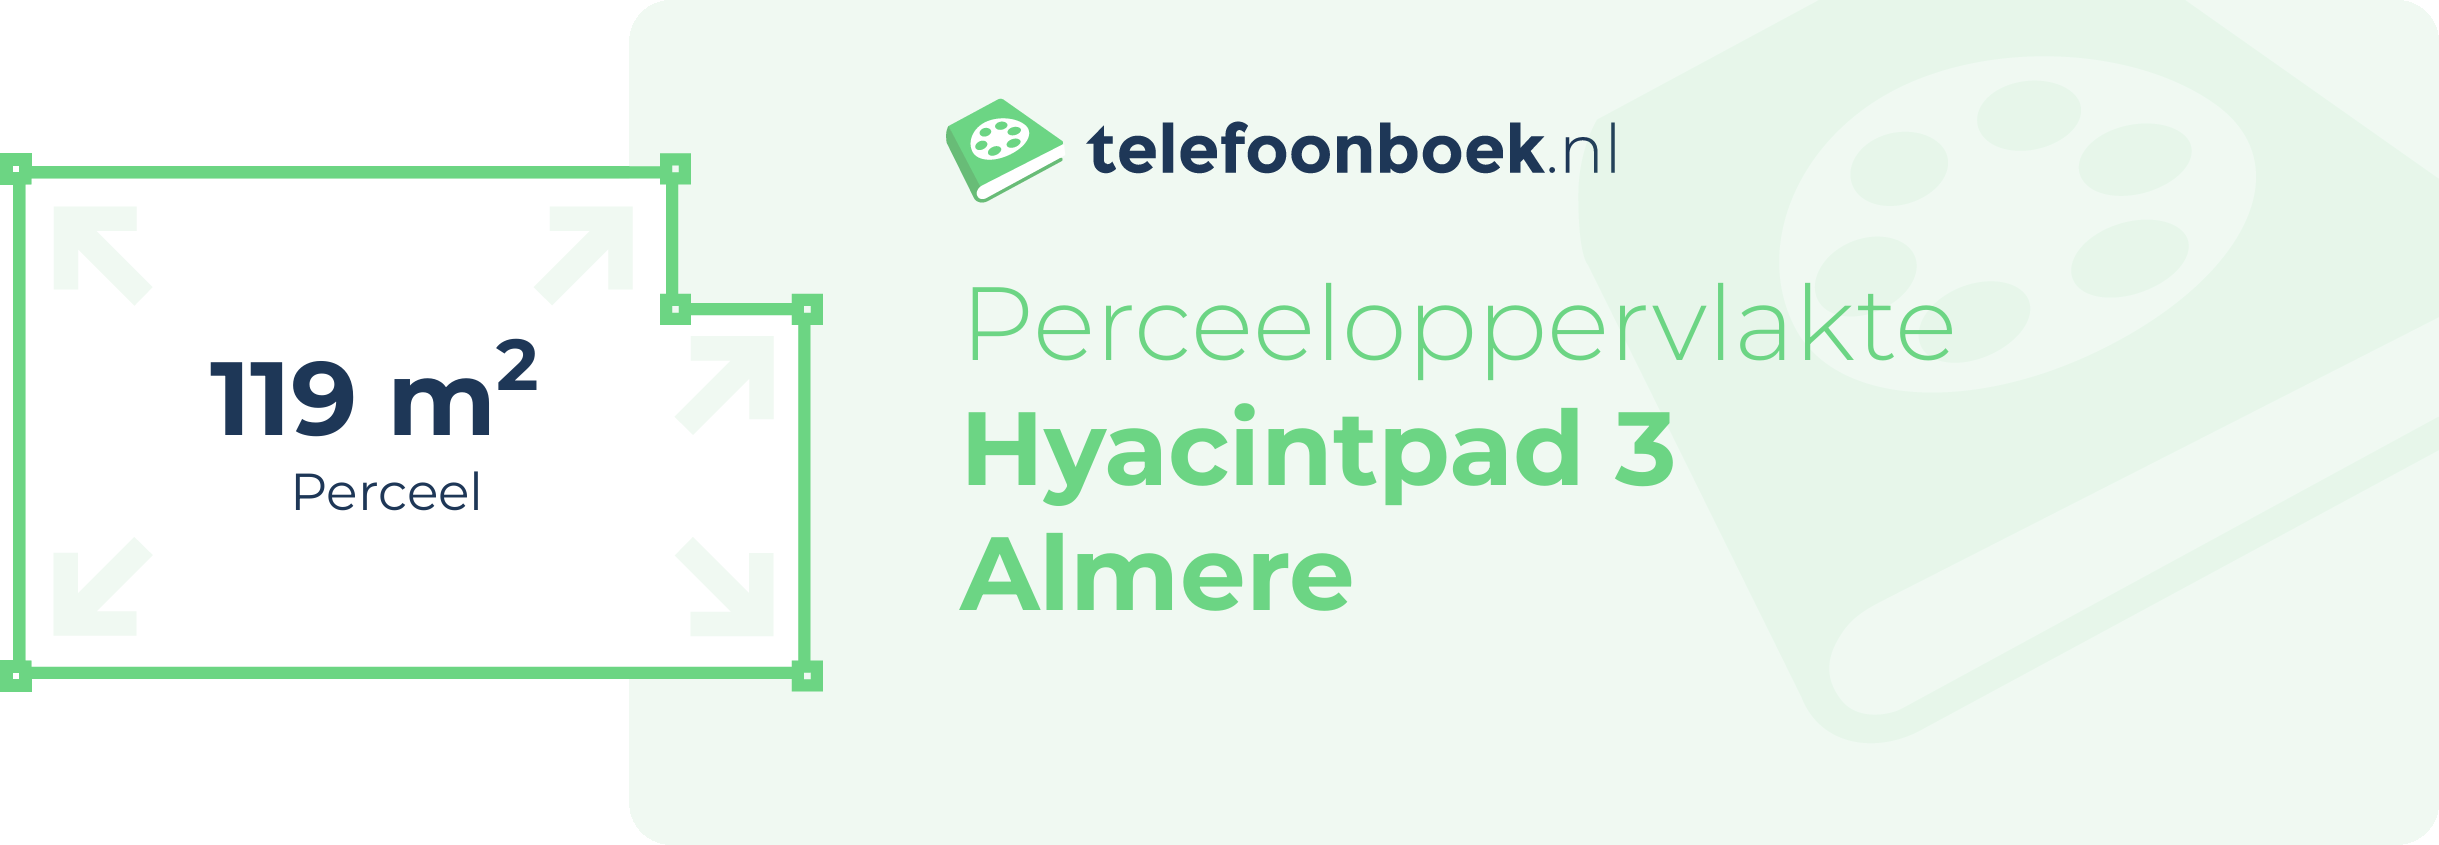 Perceeloppervlakte Hyacintpad 3 Almere